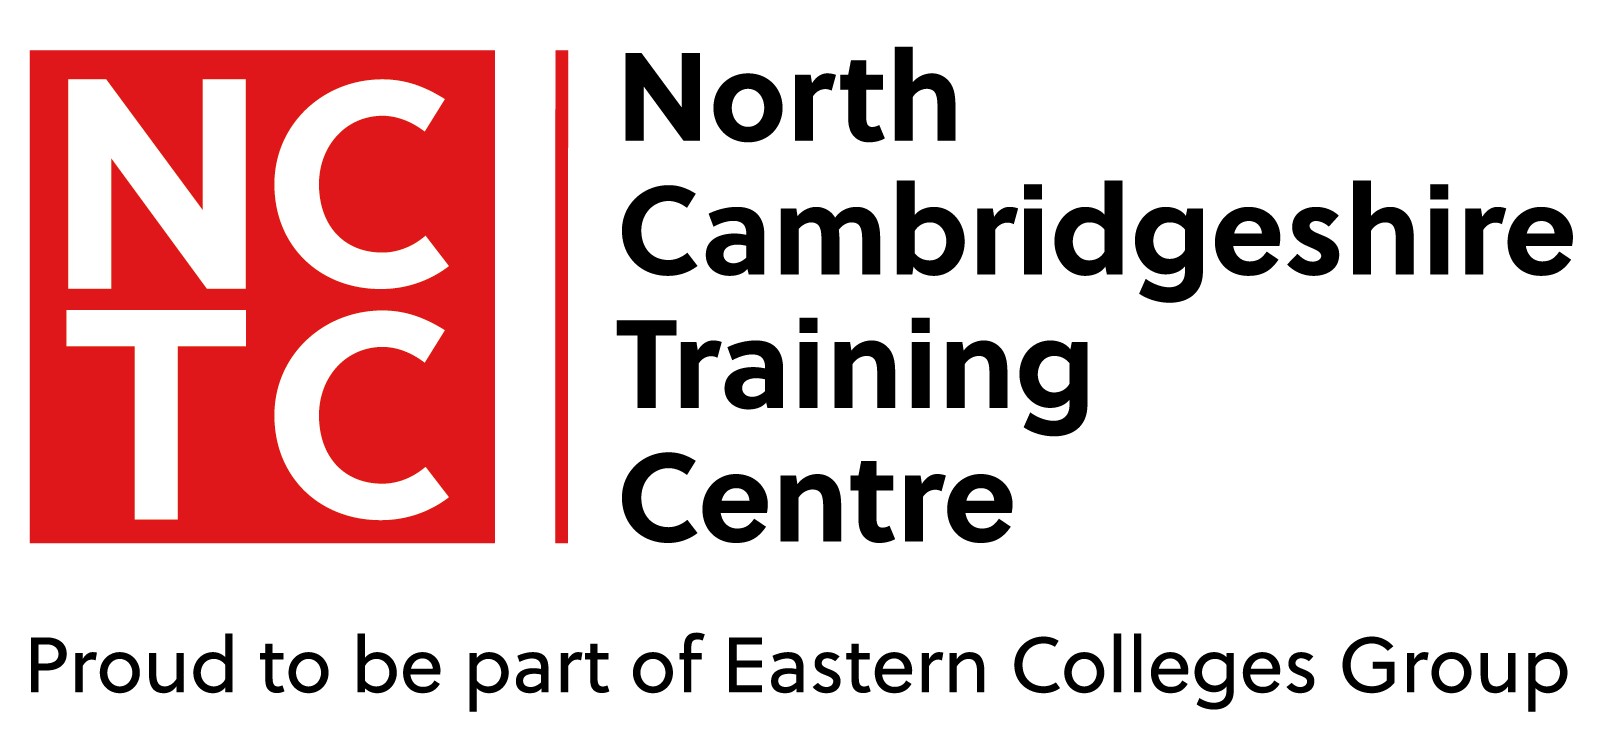 North Cambridgeshire Training Centre Logo